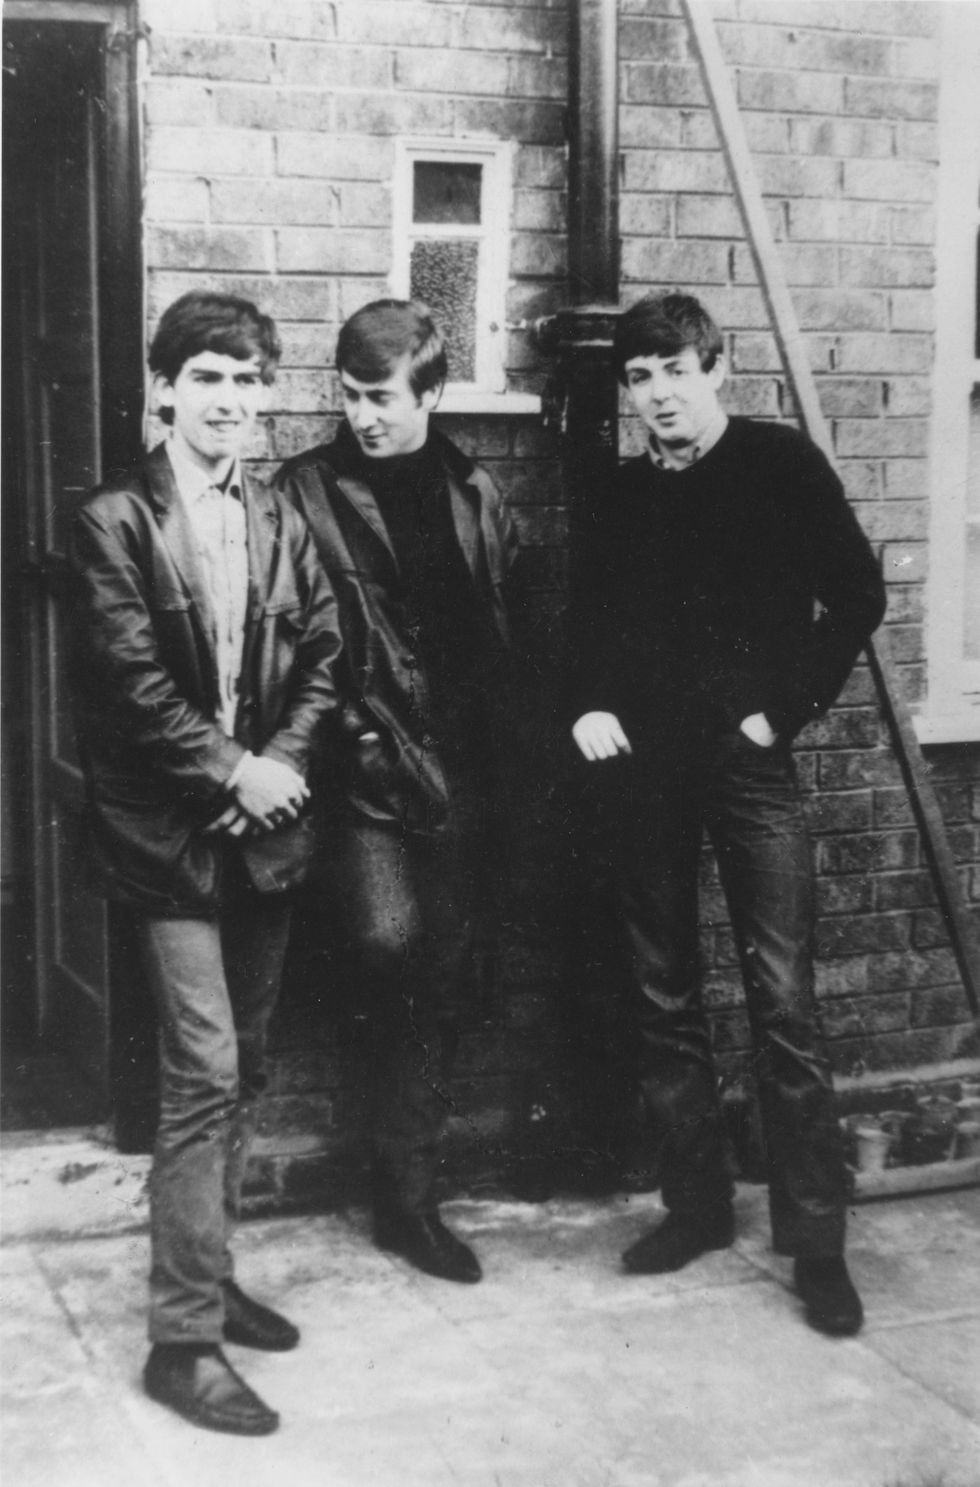 George Harrison, John Lennon and Paul McCartney